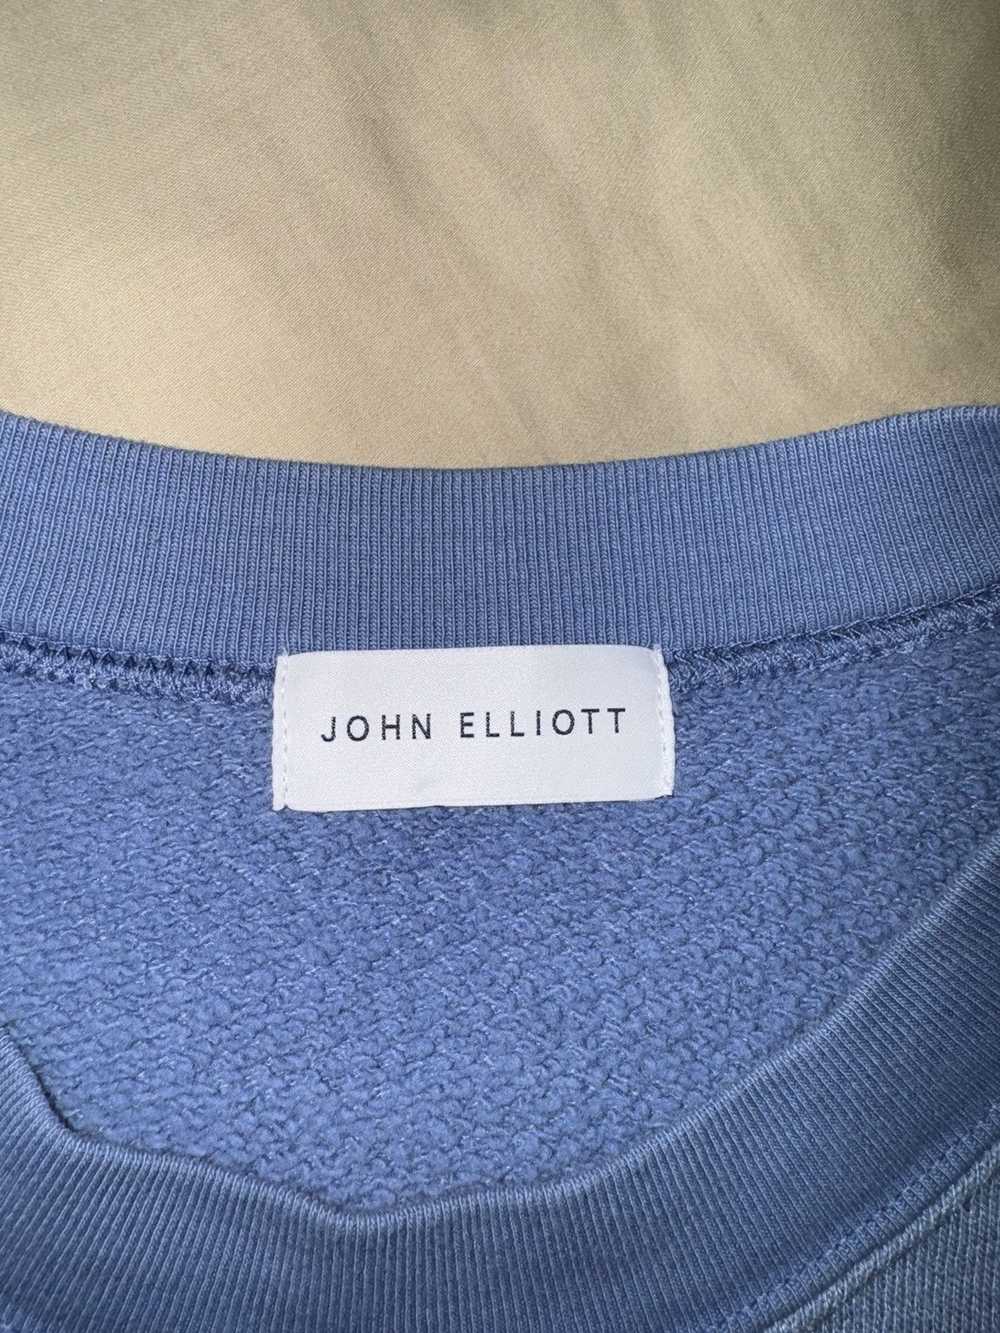 John Elliott John Elliot Crewneck Sweater Size La… - image 2